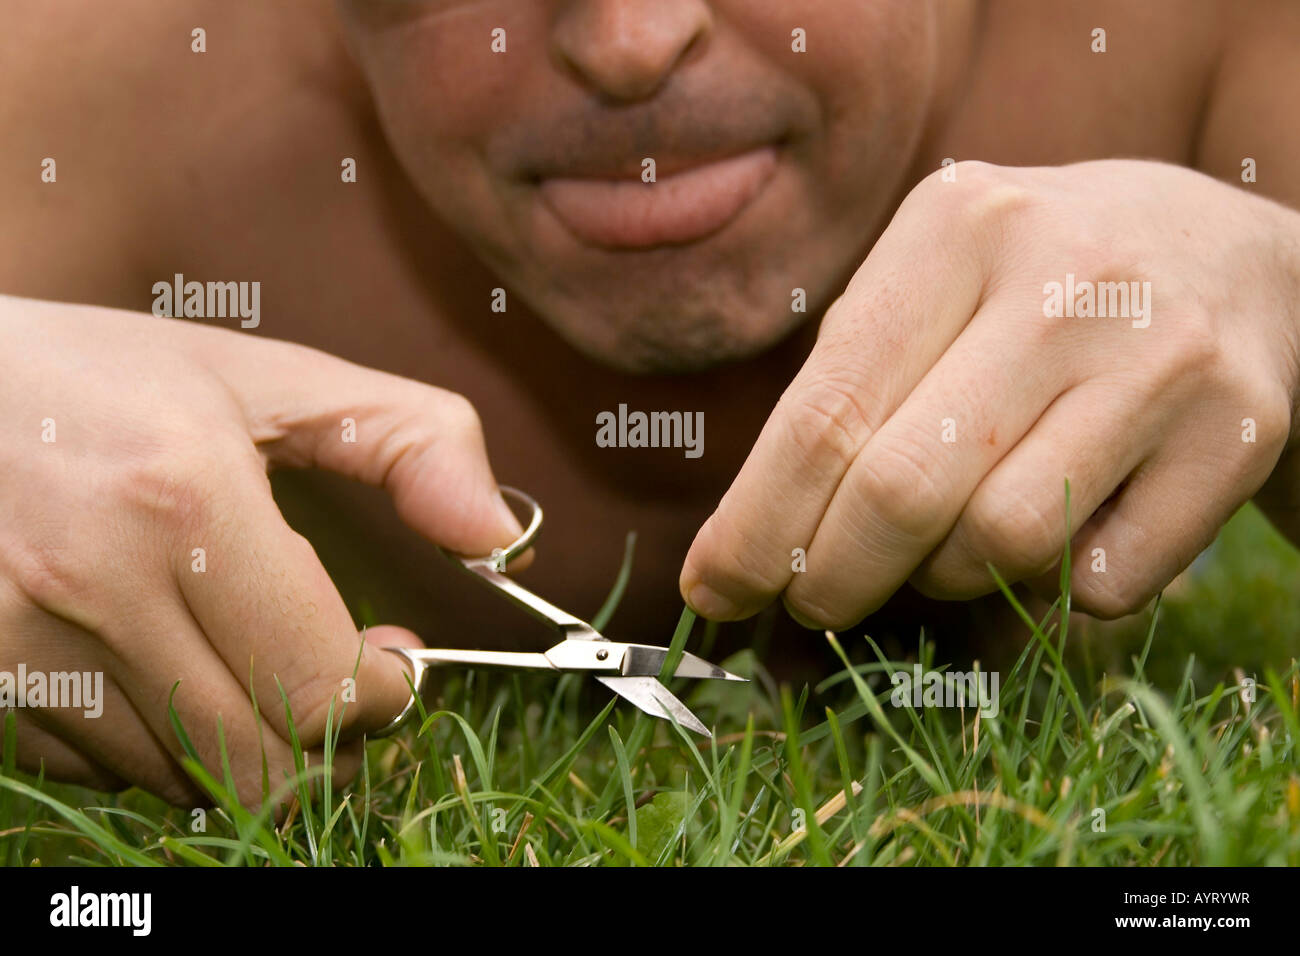 Man cutting grass on his lawn using nail scissors Stock Photo